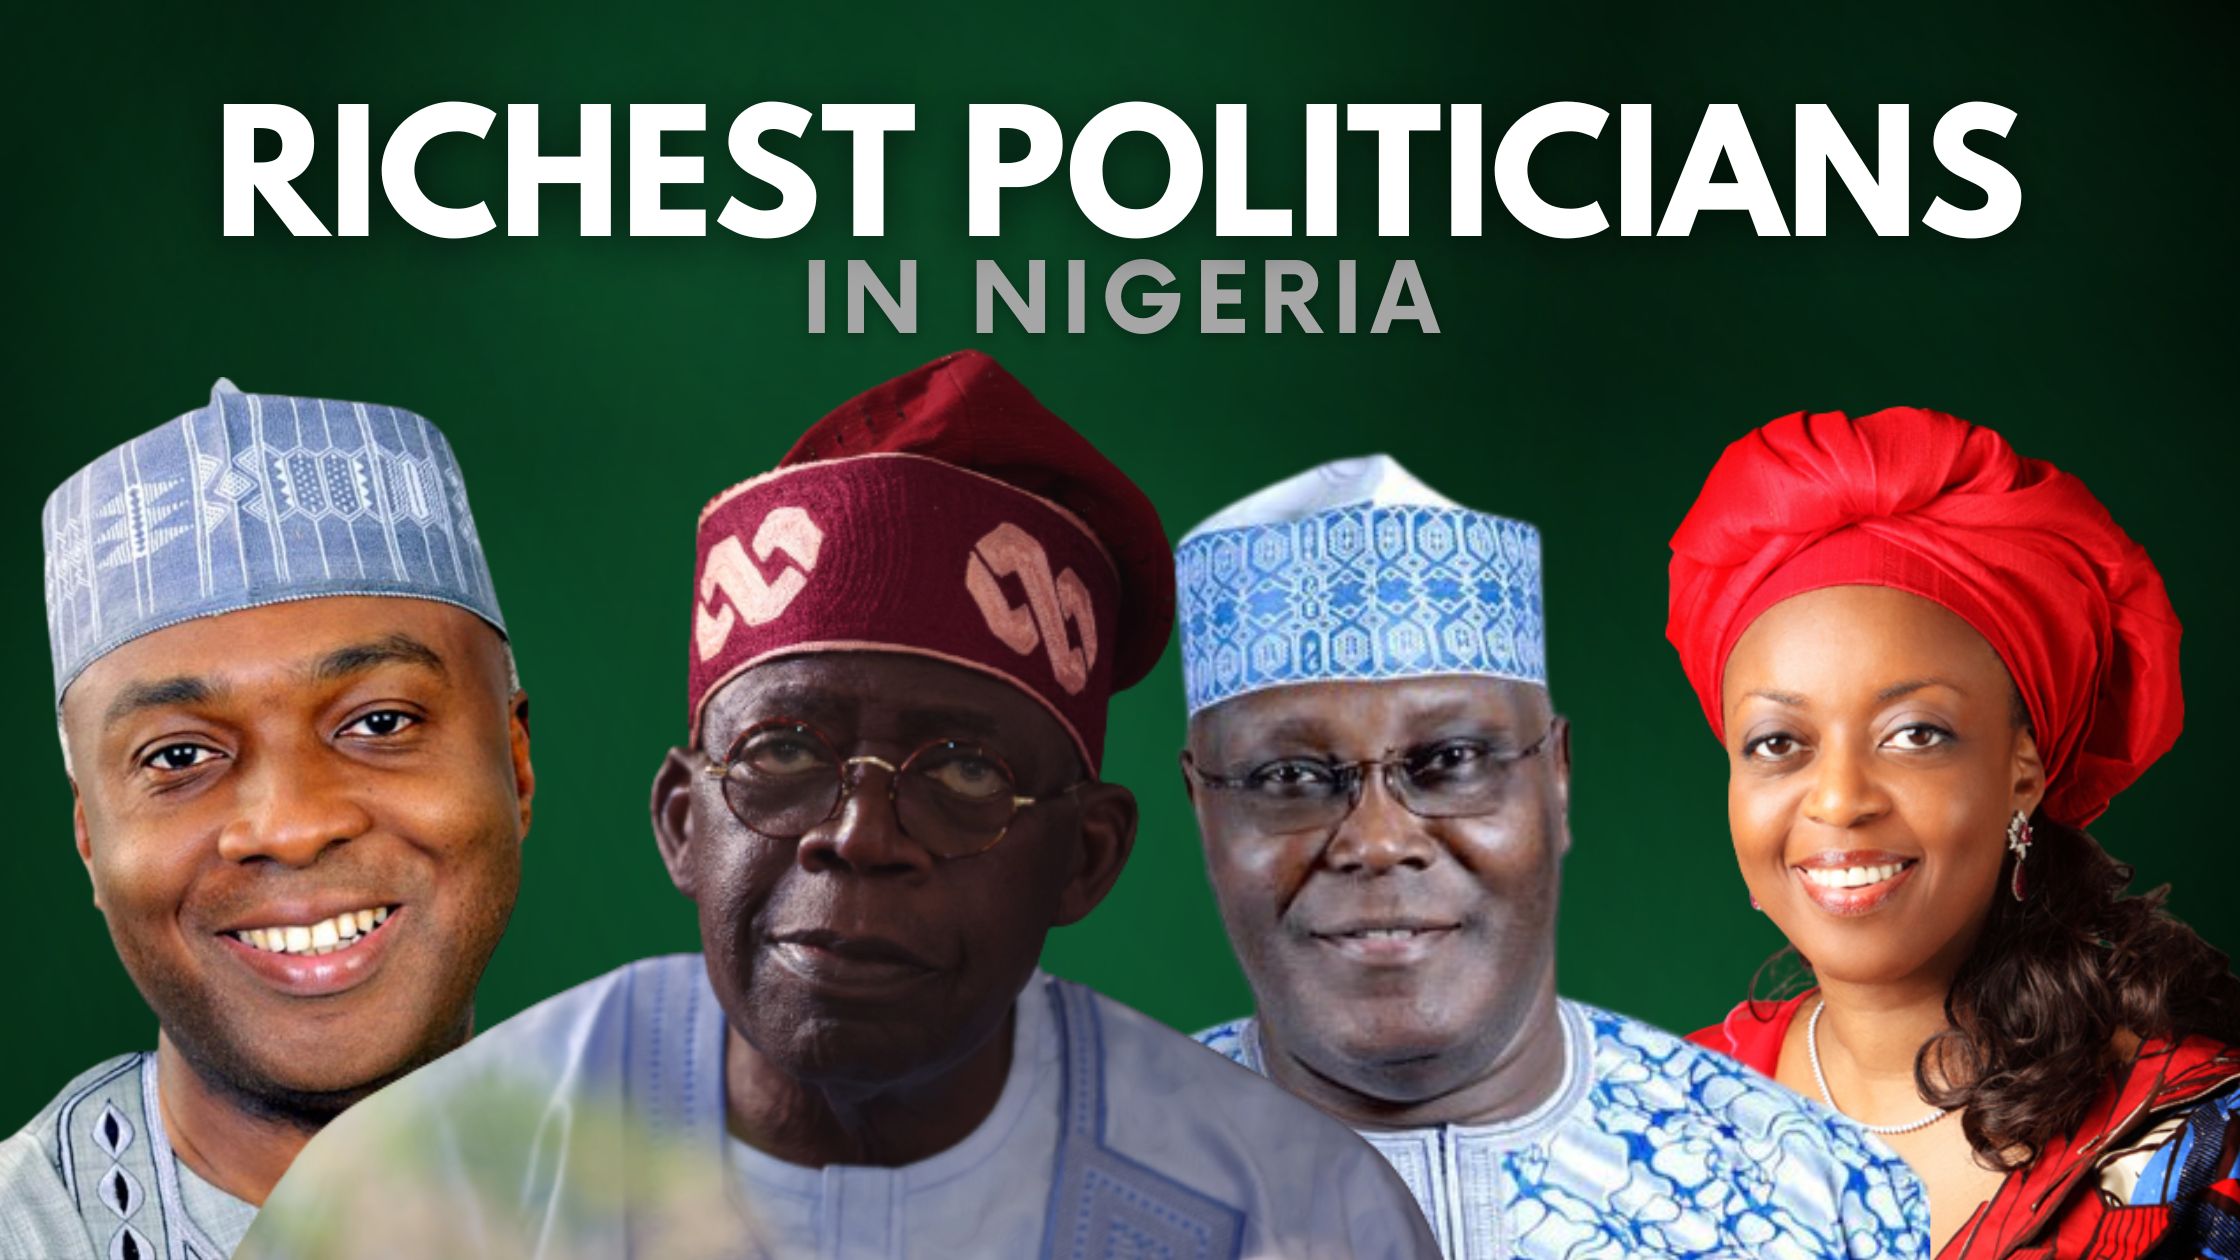 _Top 20 Richest Politicians in Nigeria and Their Net Worth - RNN